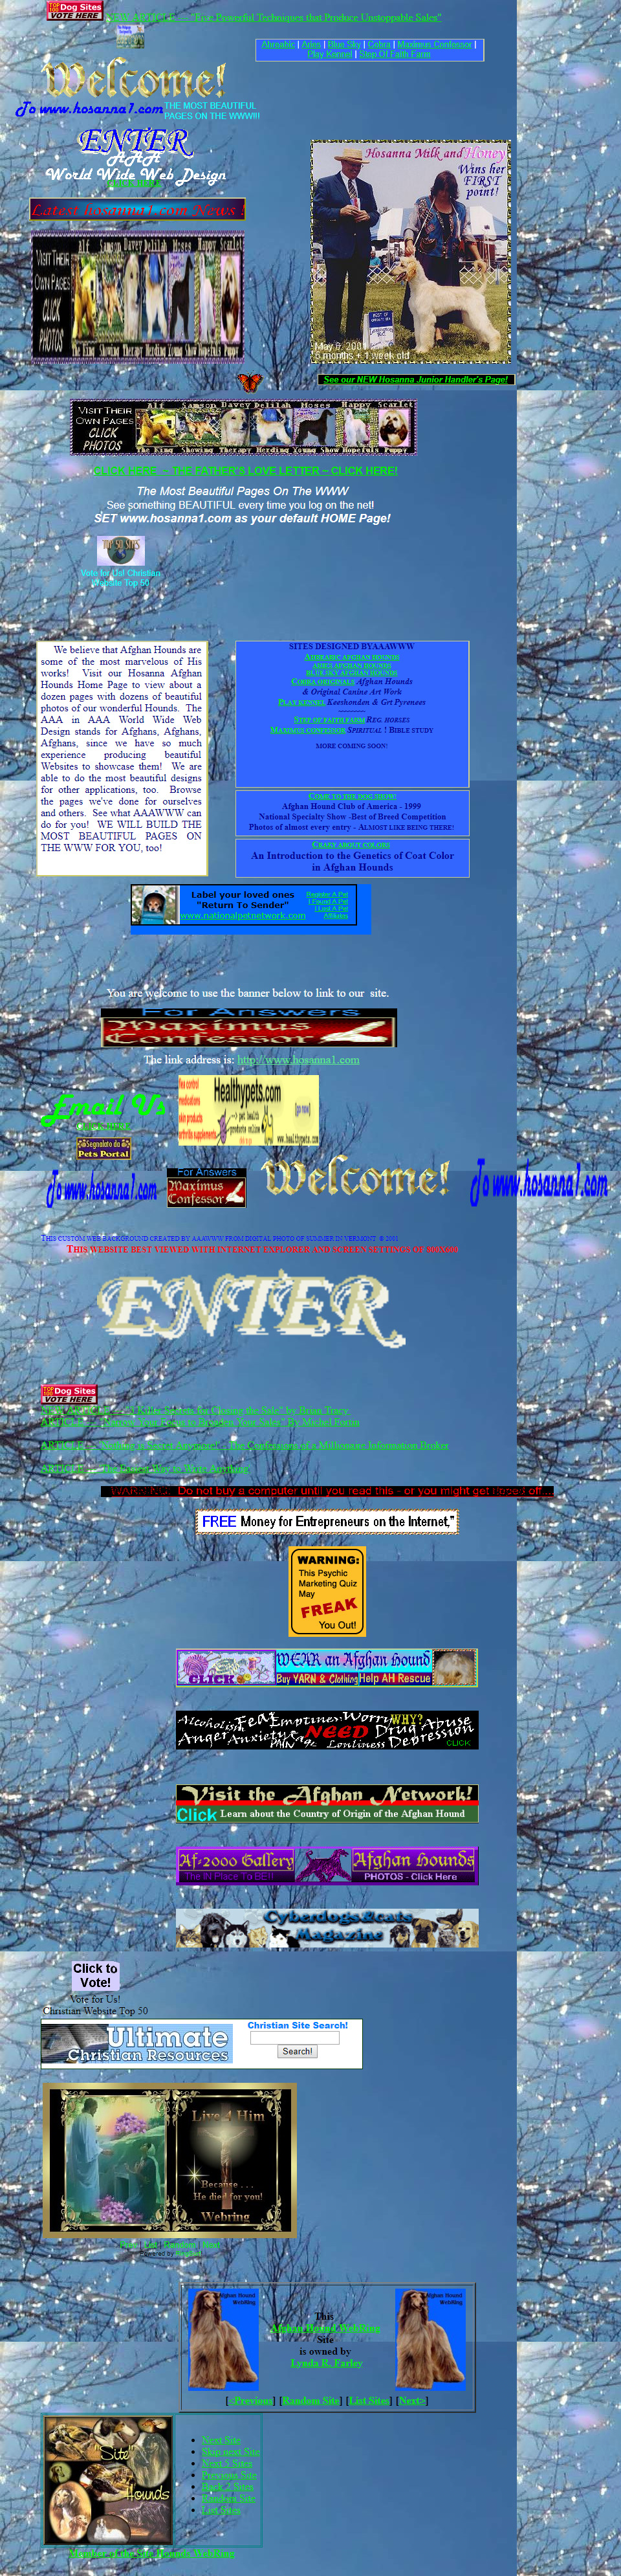 Afghan Hounds website in 2001